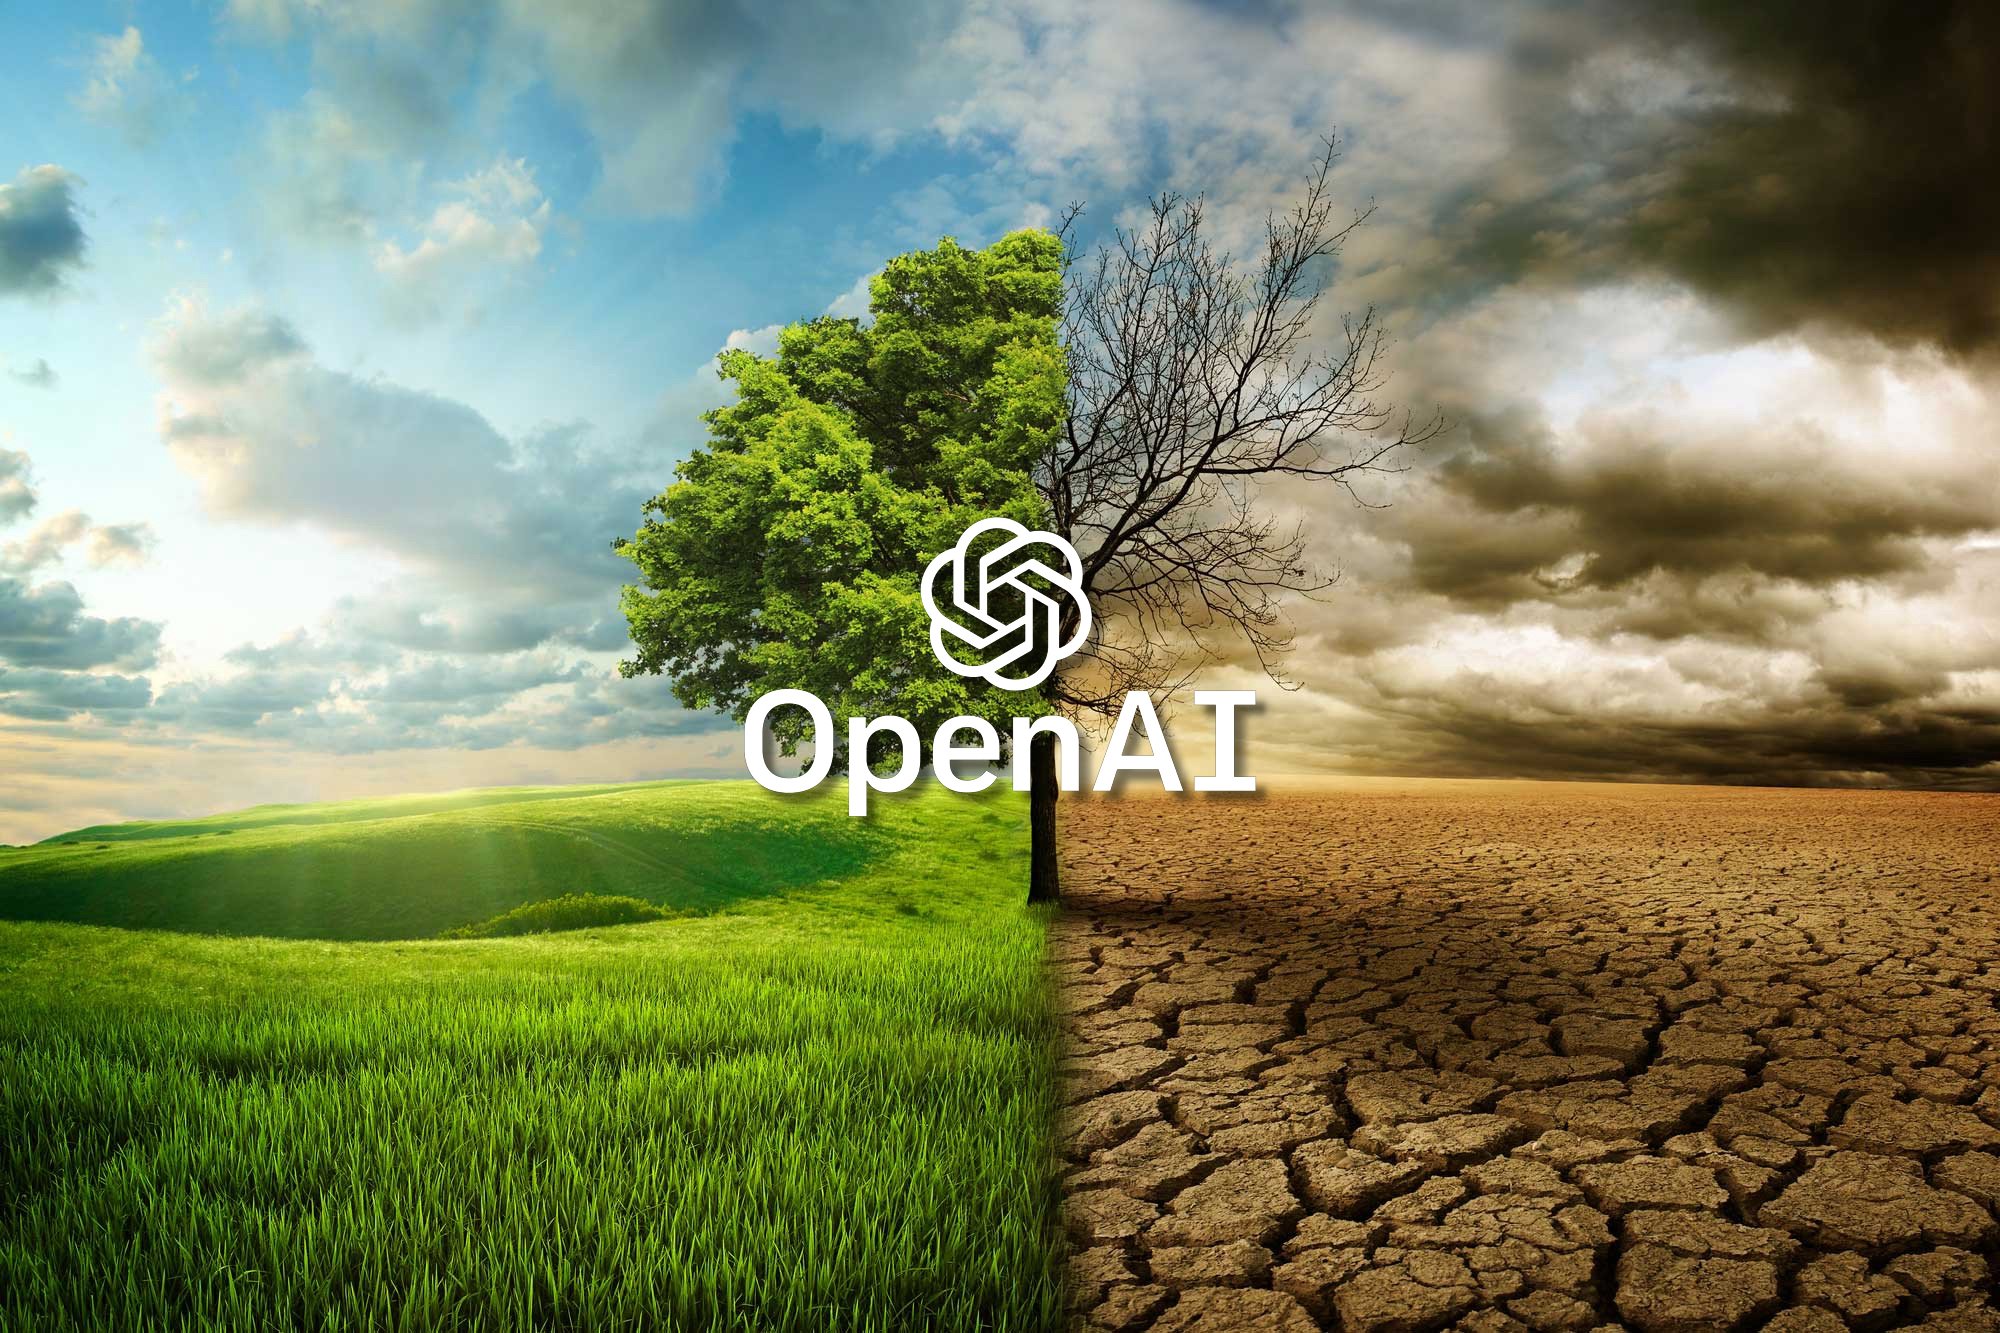 OpenAPI generated blog post regarding “Climate Change”